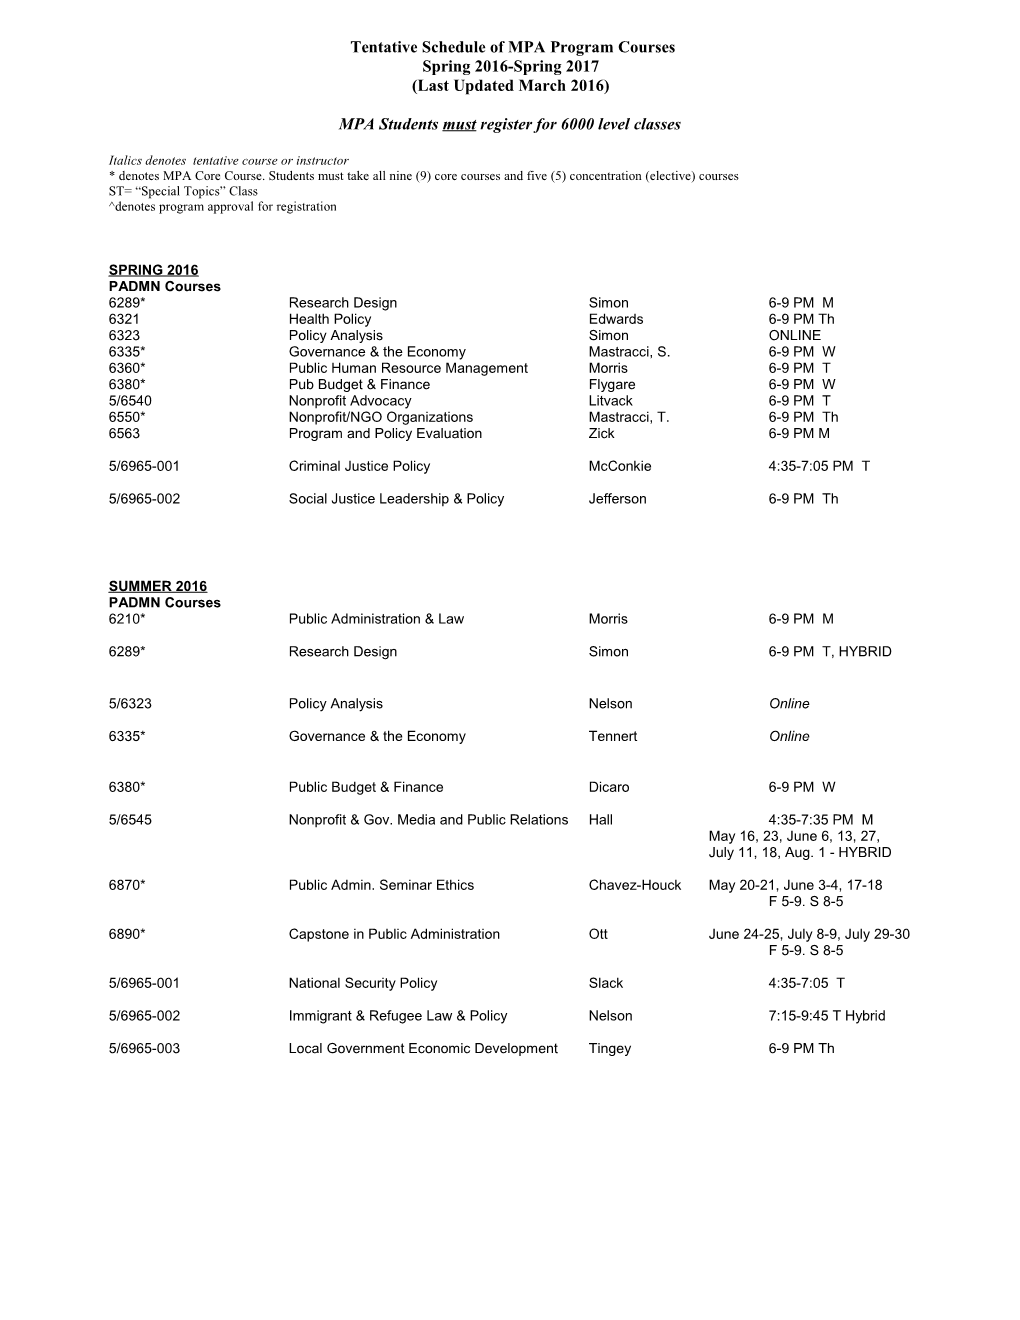 Tentative Schedule of MPA Courses 2003-2004